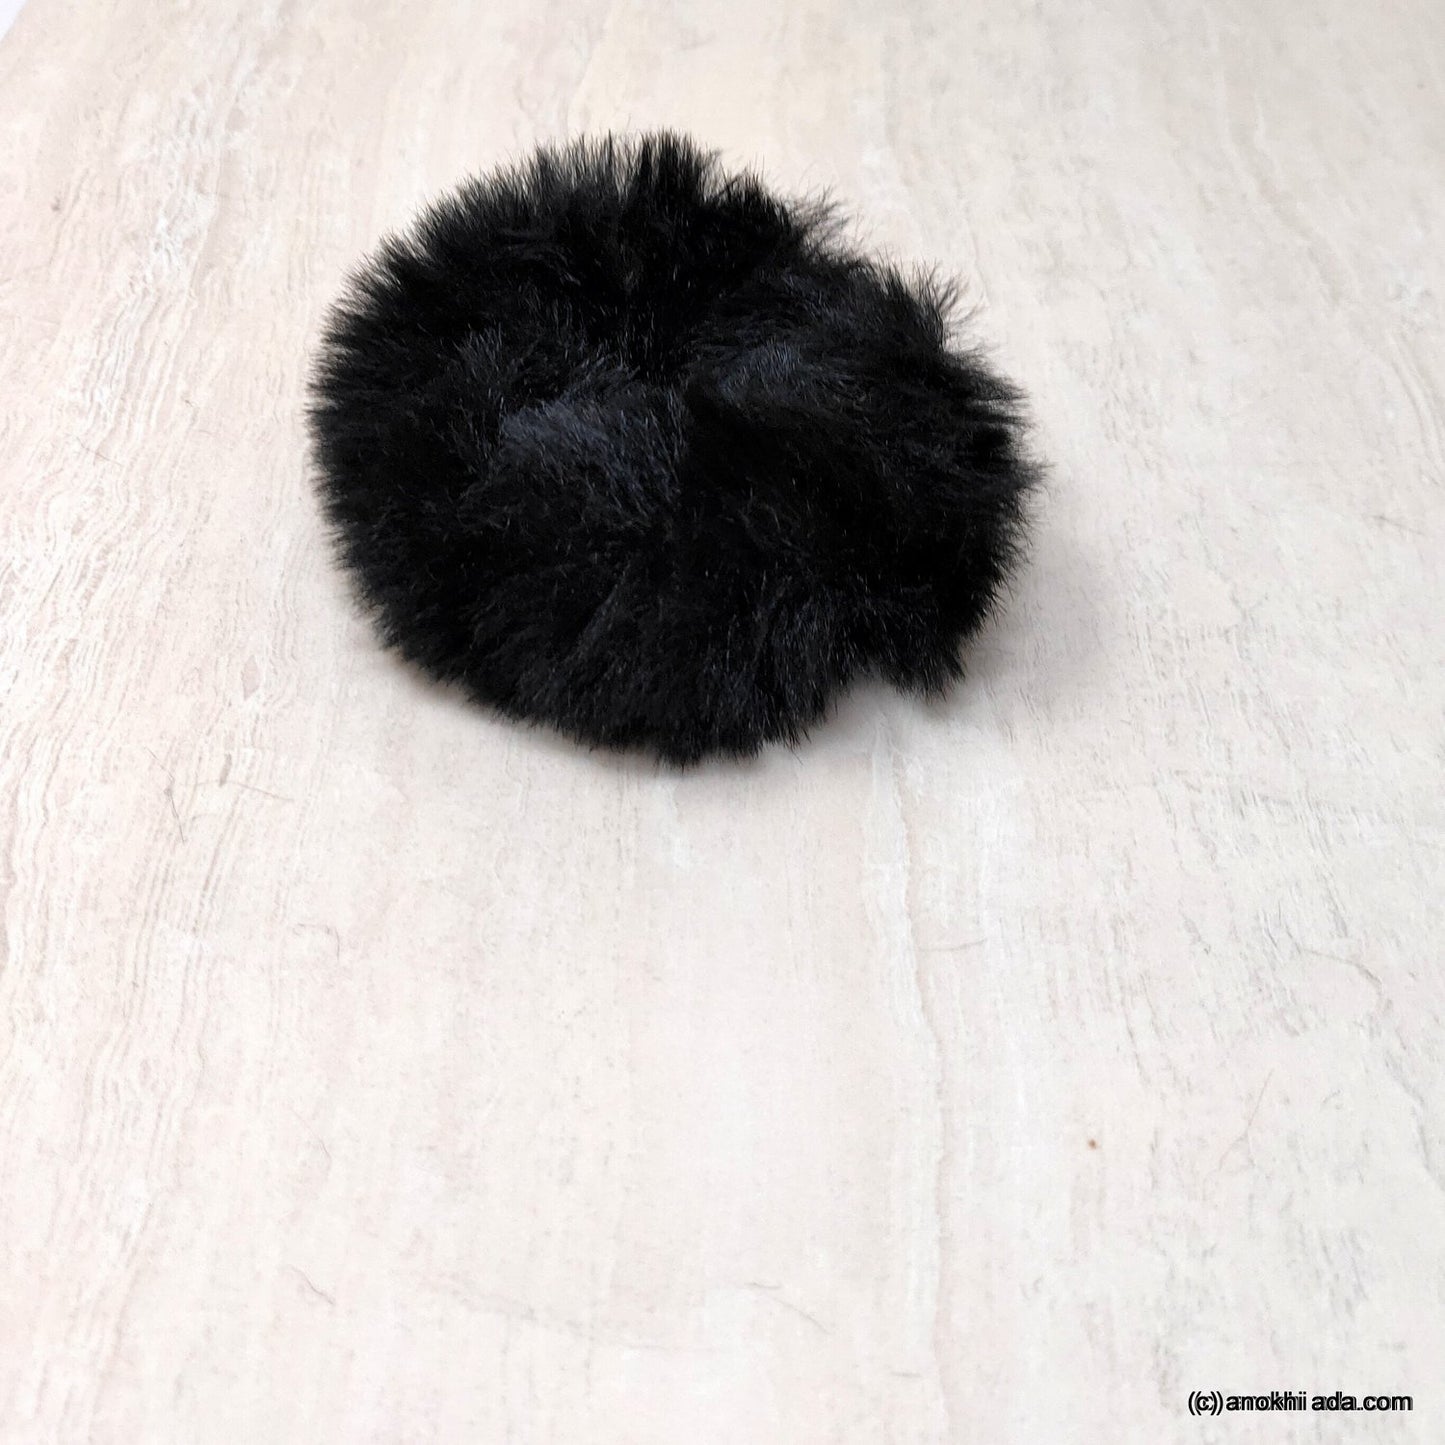 Anokhi Ada Black Fur Scrunchie for Girls and Women (ZG-45 Scrunchie)